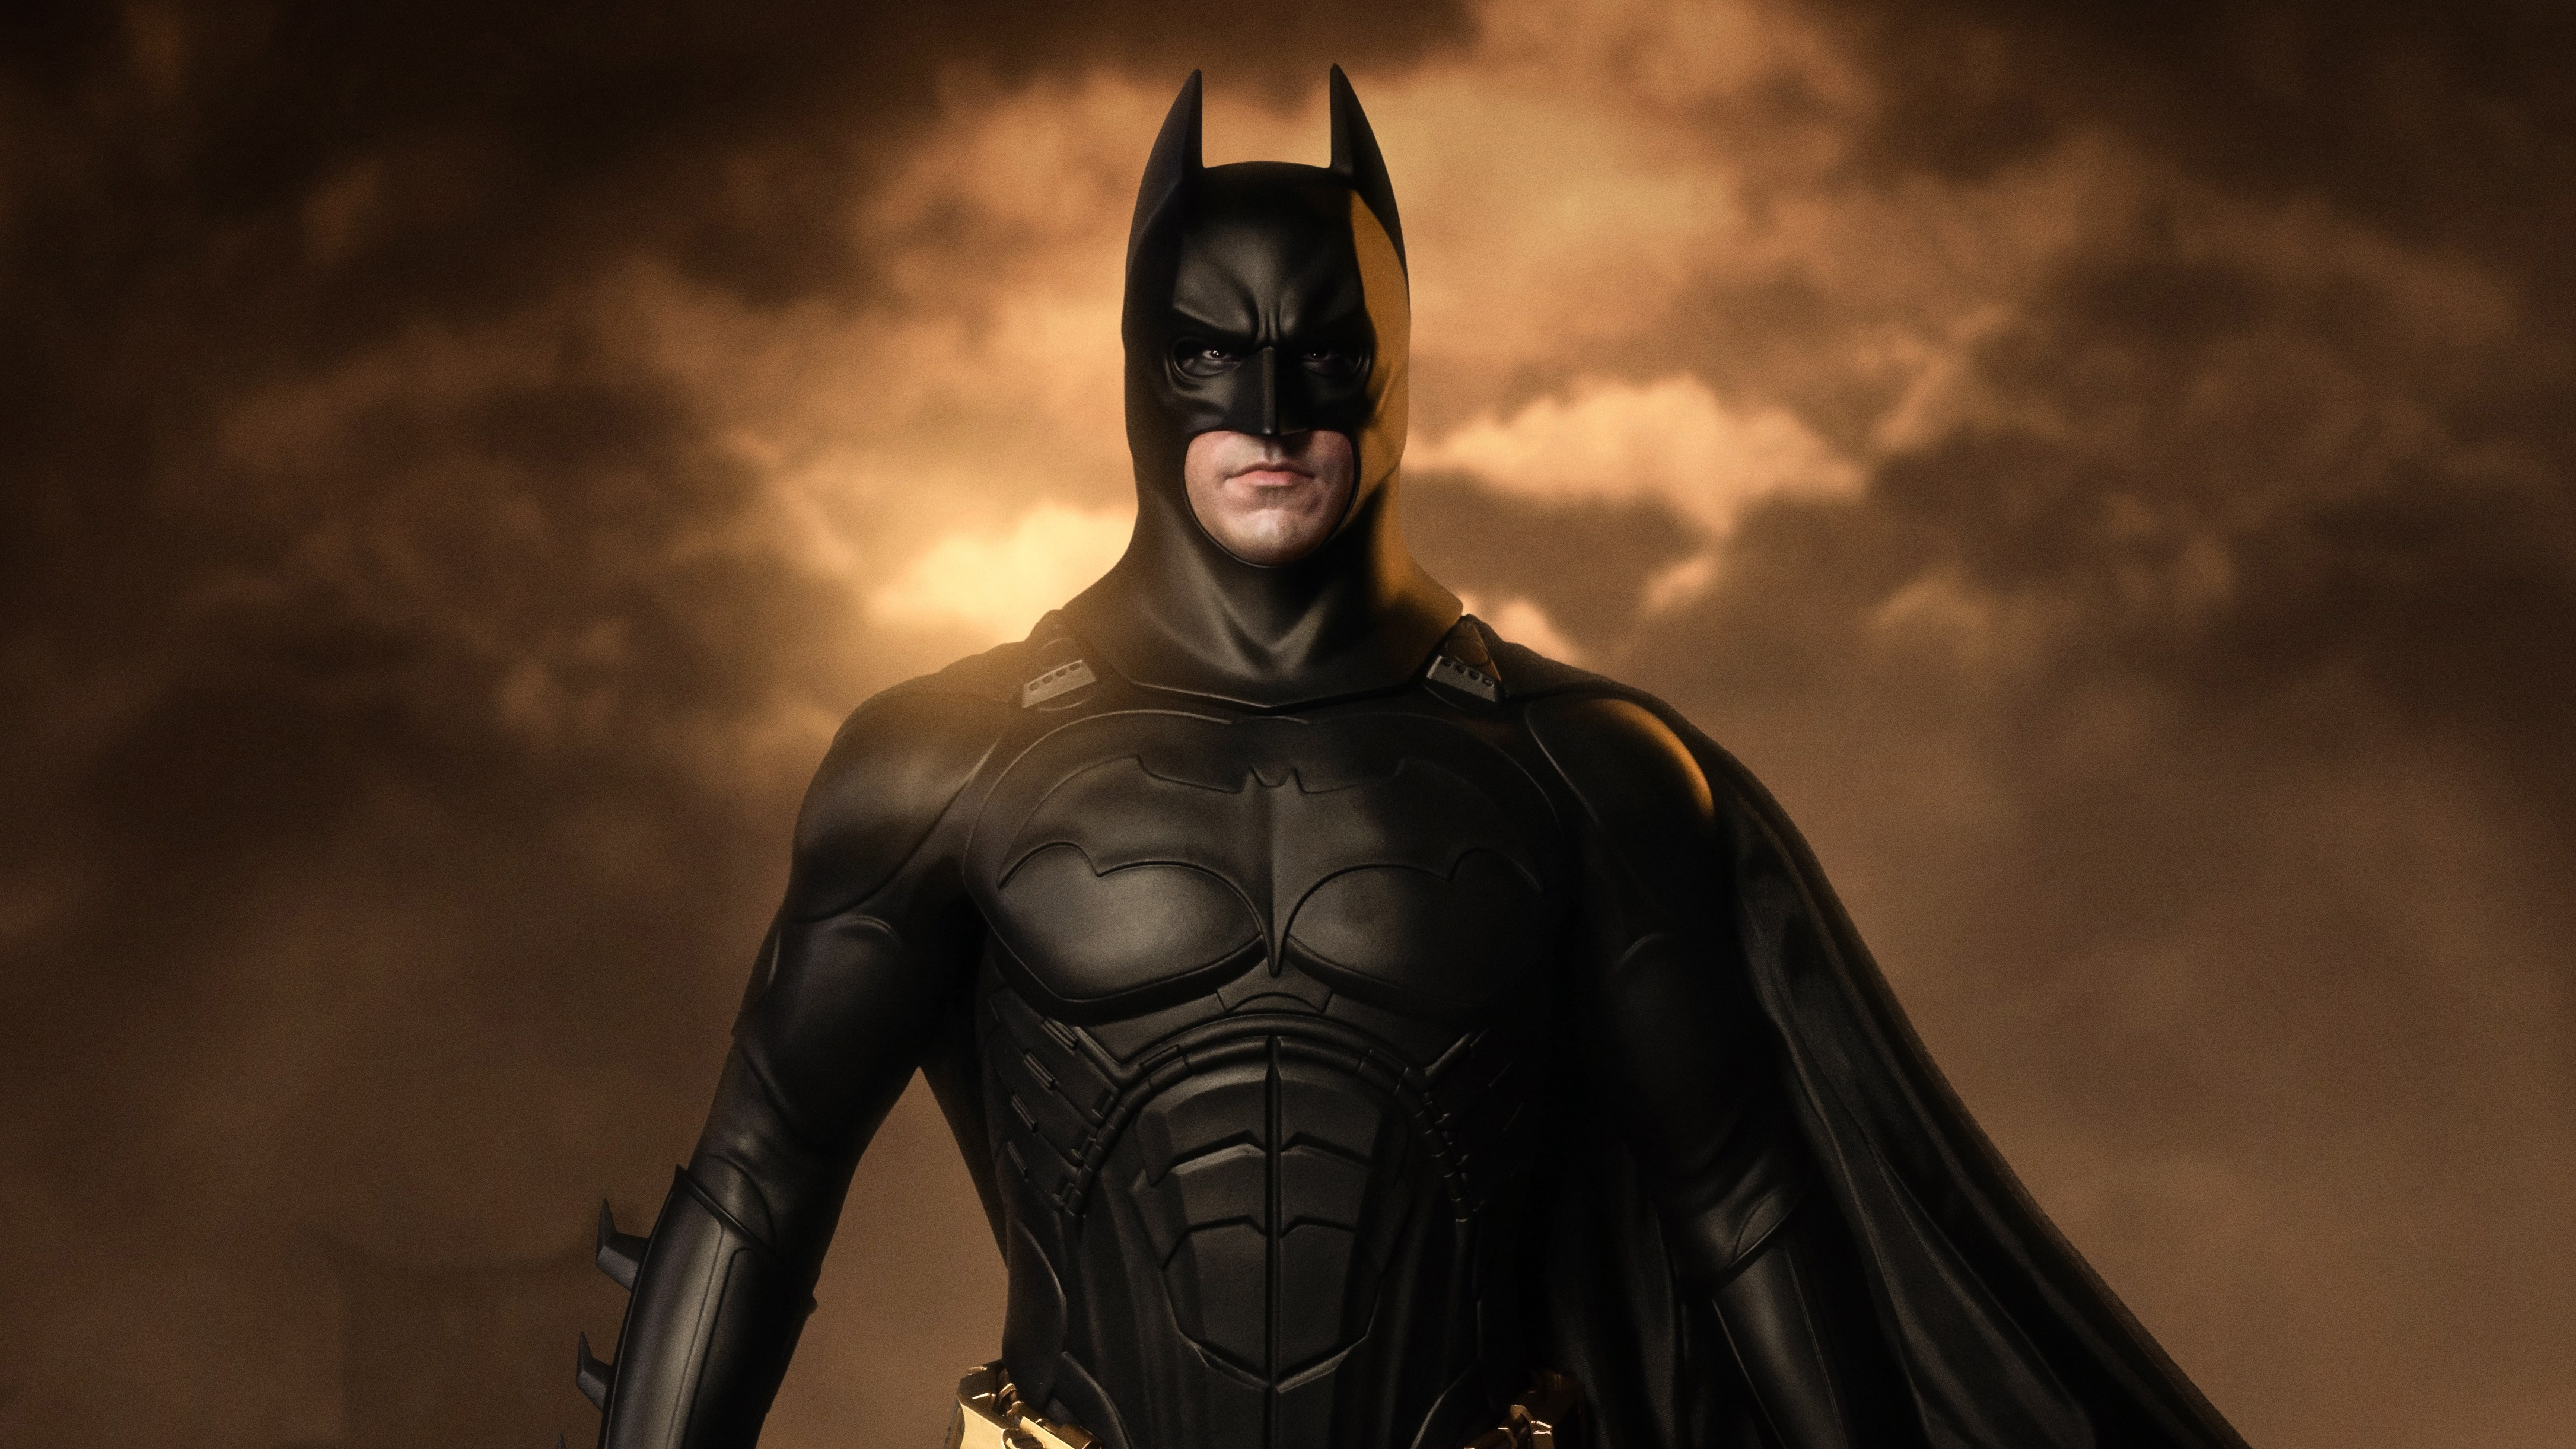 Batman Begins 4k, HD Superheroes, 4k Wallpaper, Image, Background, Photo and Picture